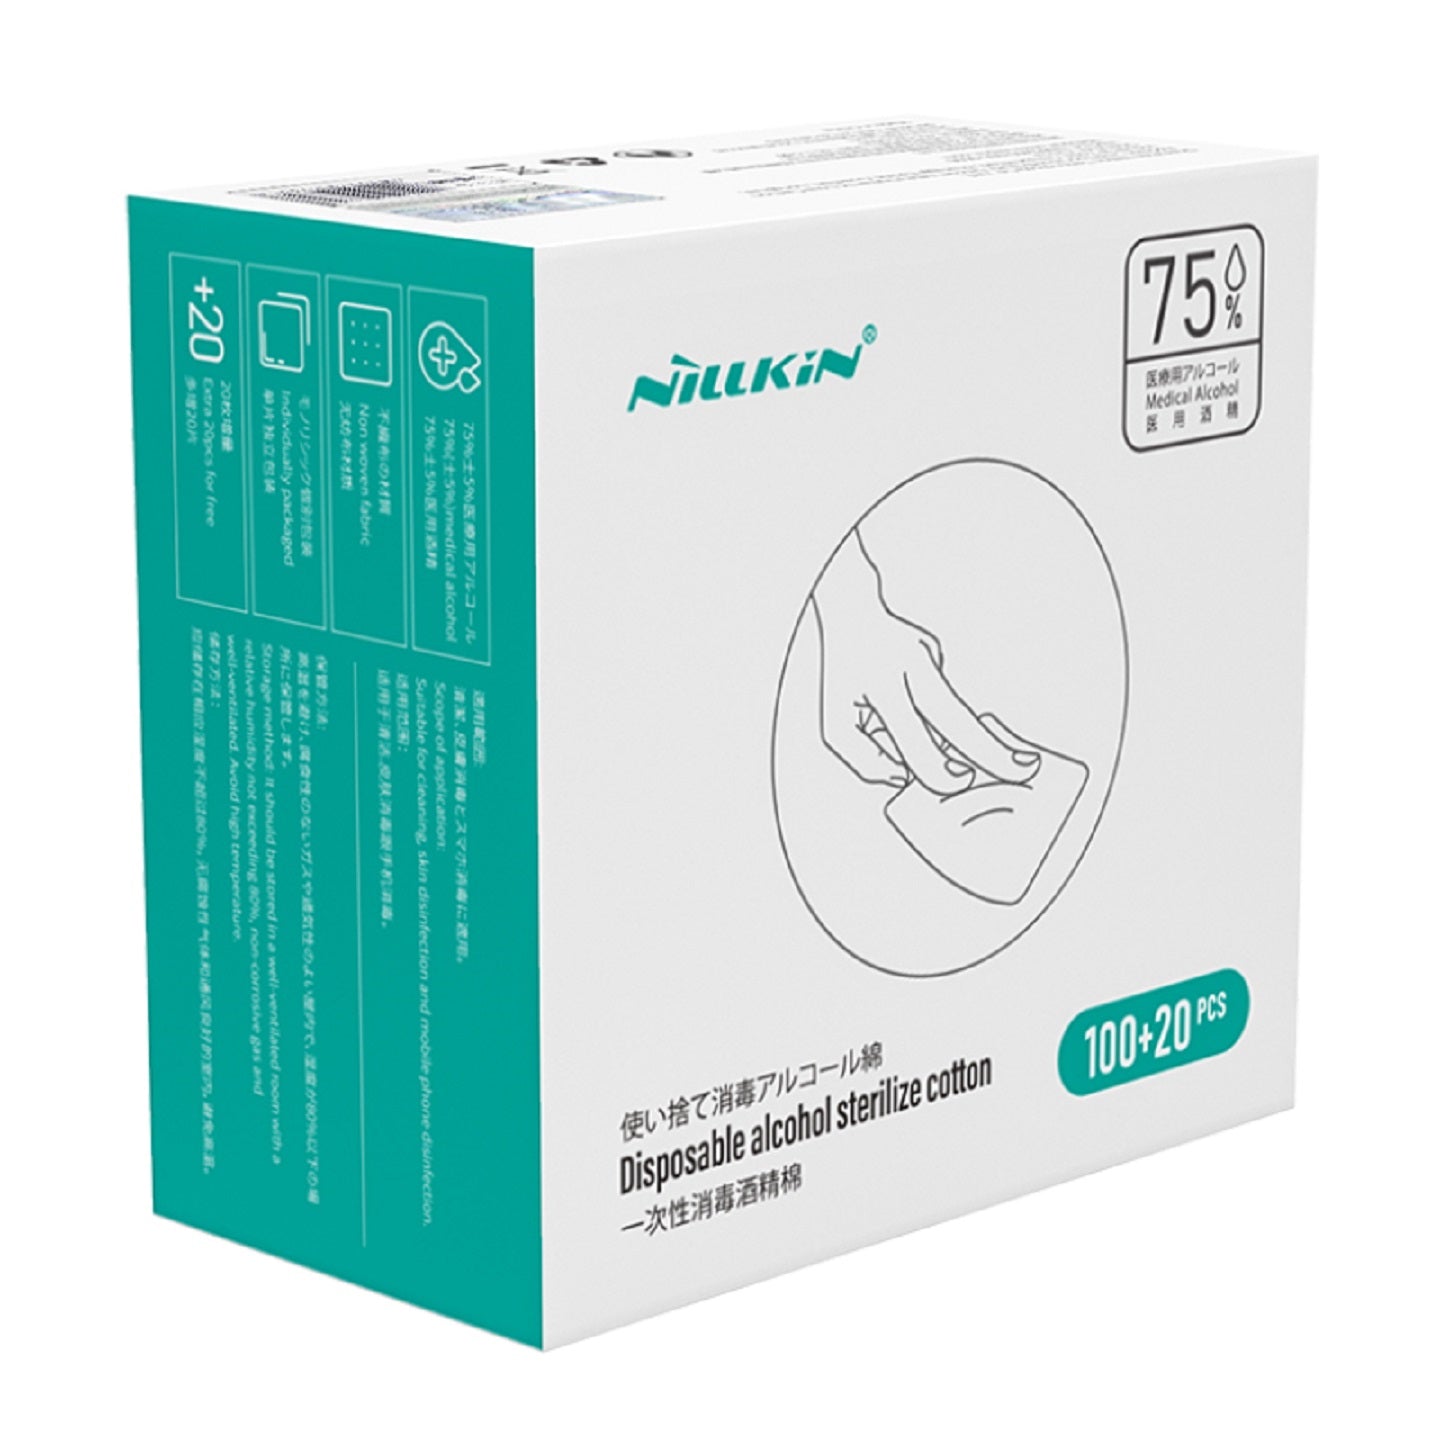 Nillkin 75% Medical Alcohol Sterilize Pad 6x6cm (120pcs) (Multi-box discount)